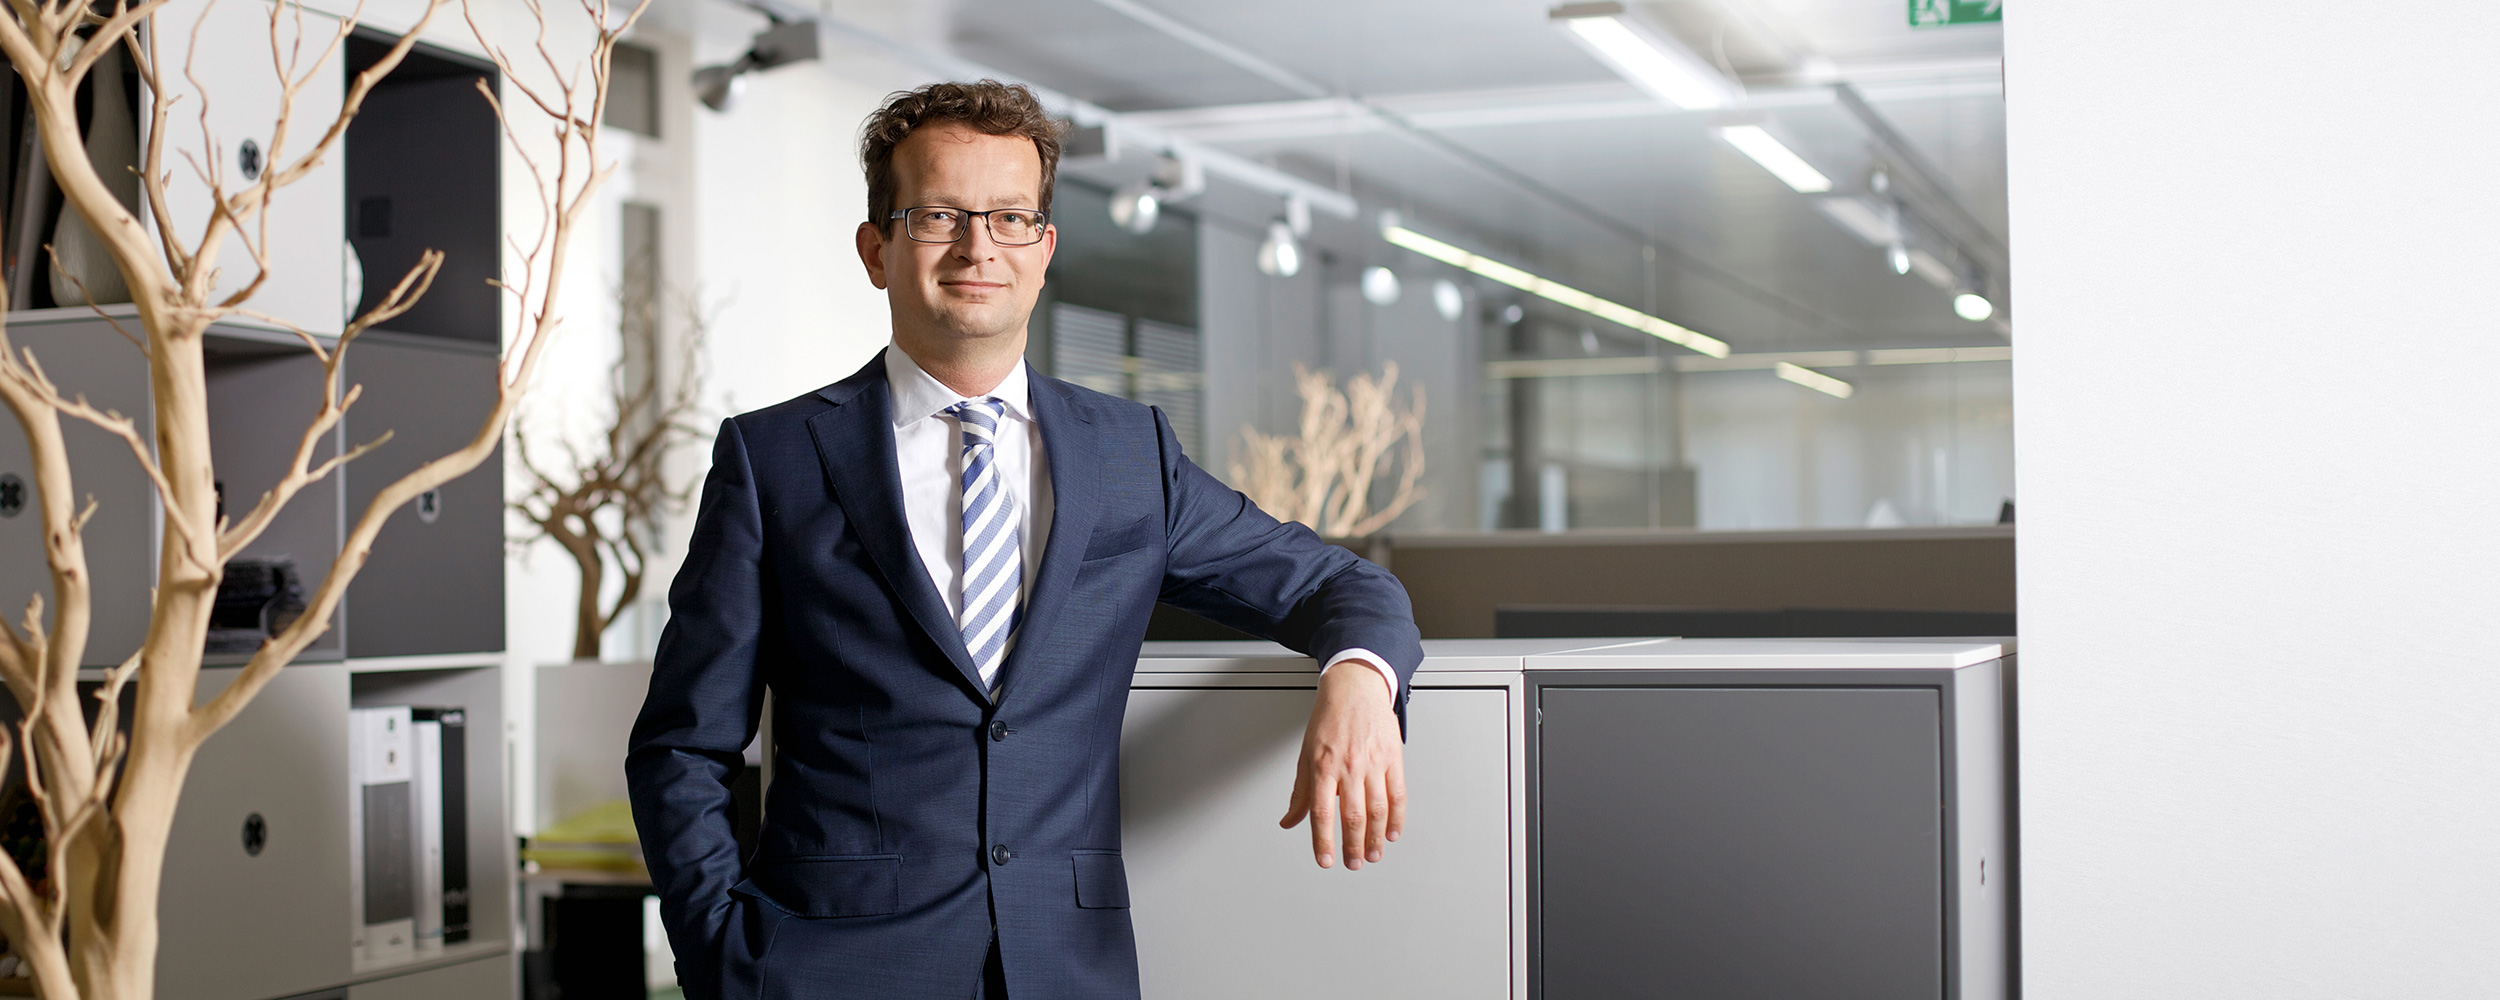 Sjoerd Broers, CEO, Managing Partner